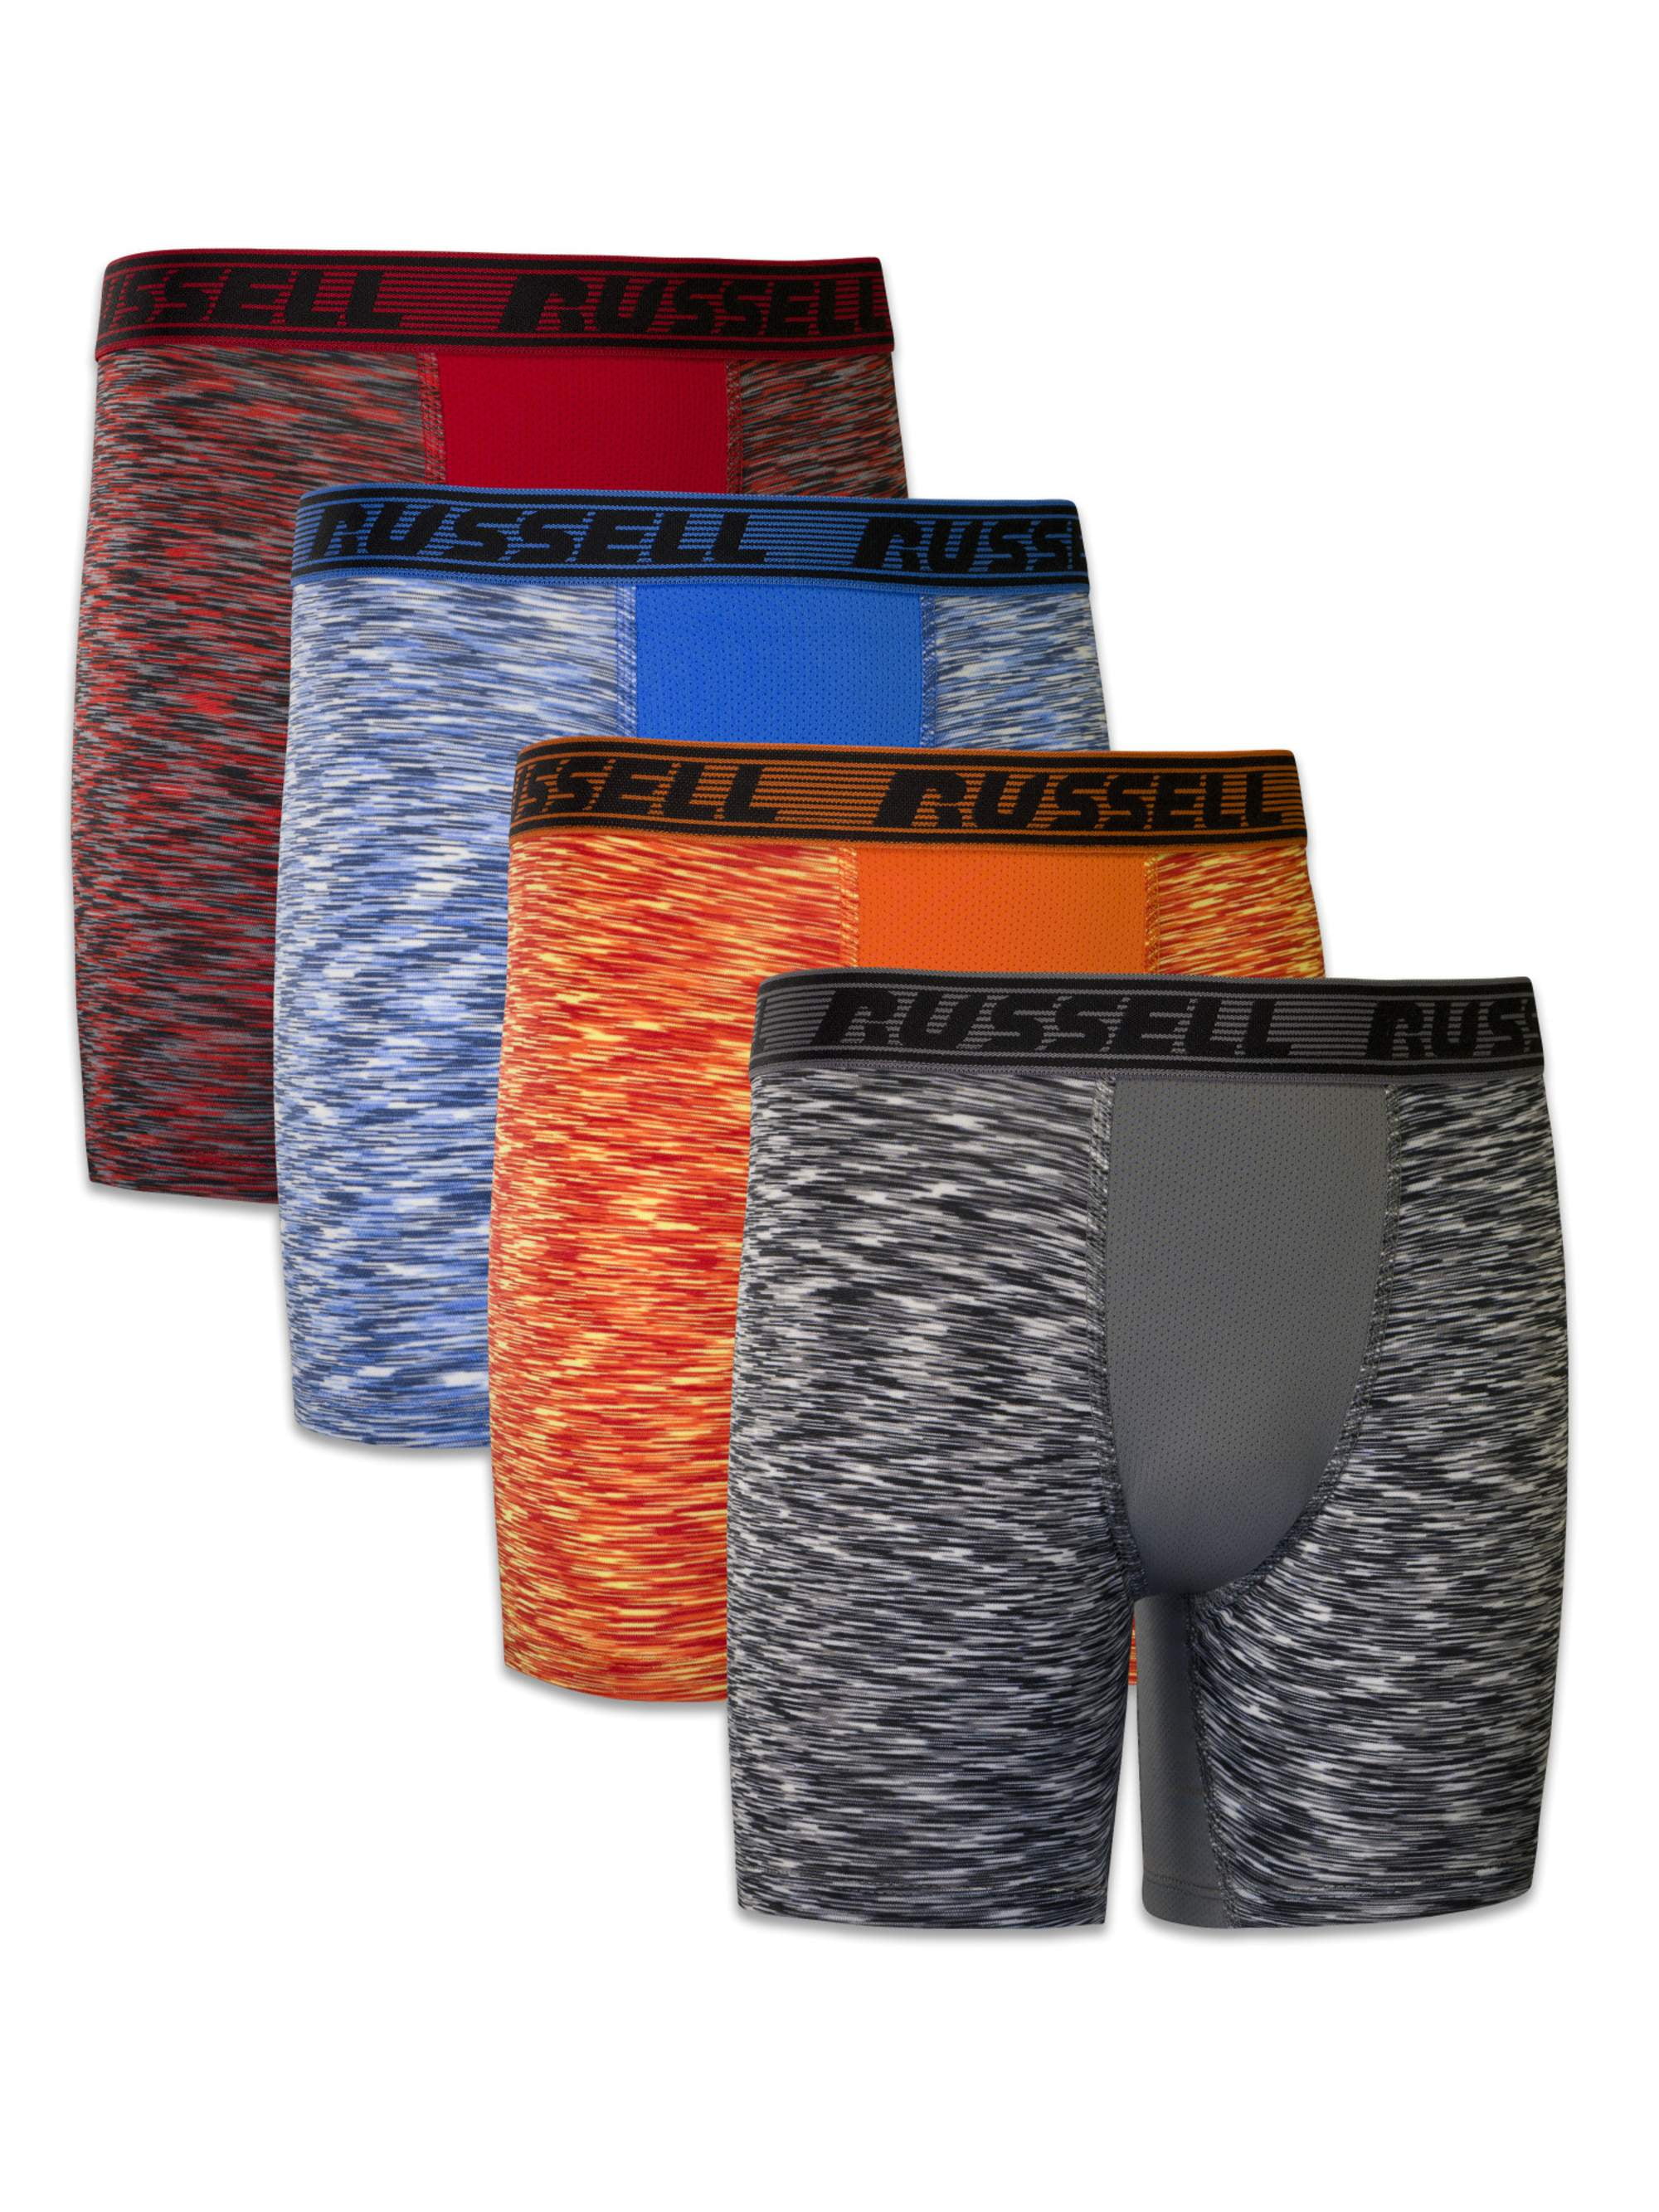 Russell Boys Underwear, 4 Pack Freshforce Odor Protection Boxer Brief ...